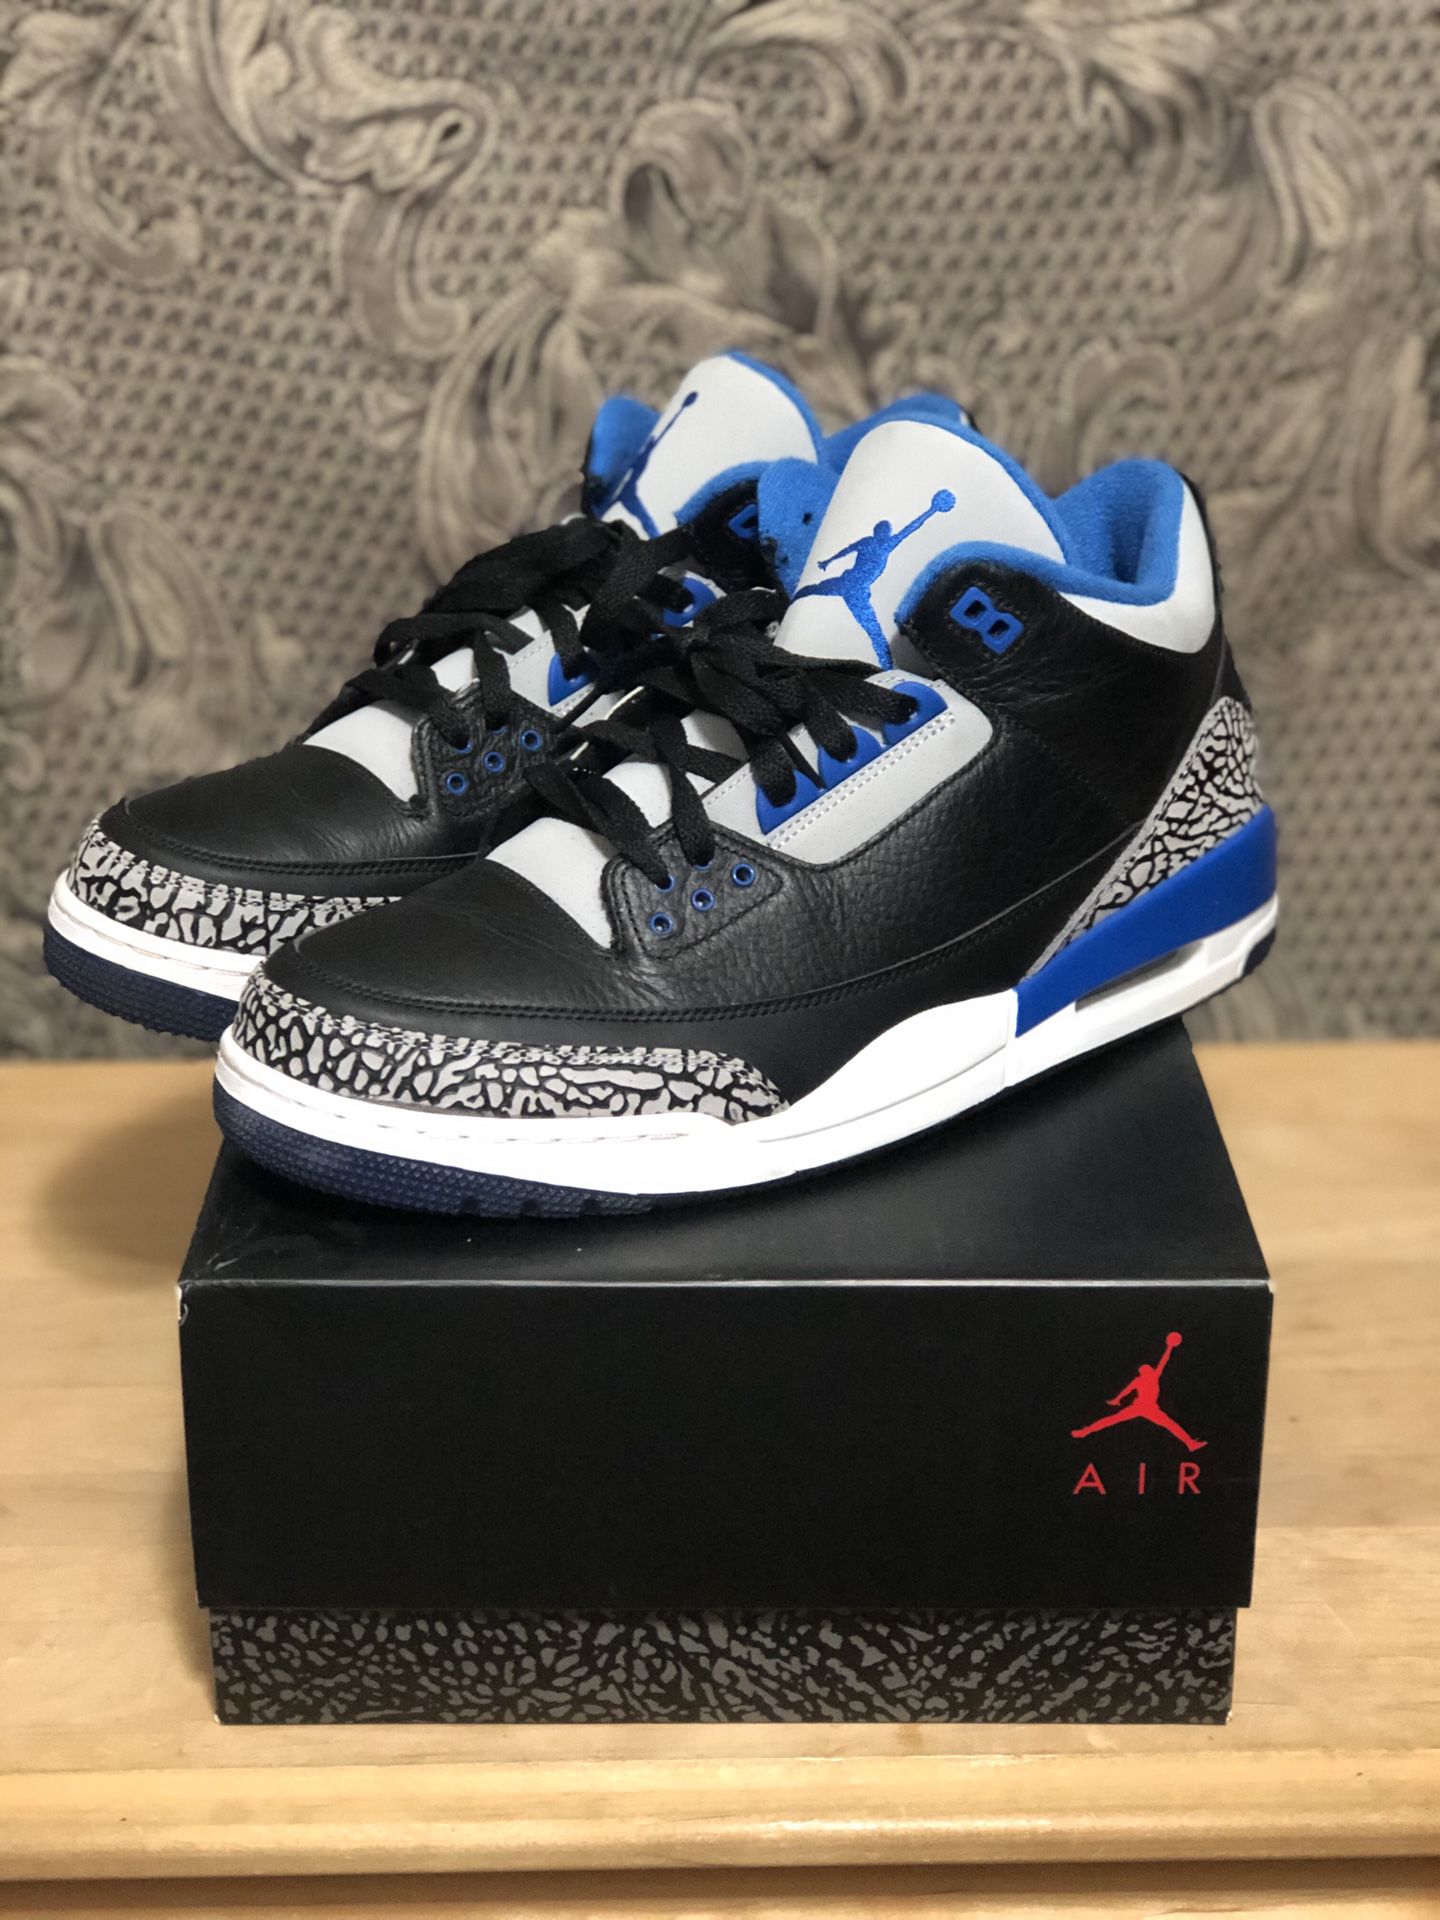 Jordan 3 sport blue size 13